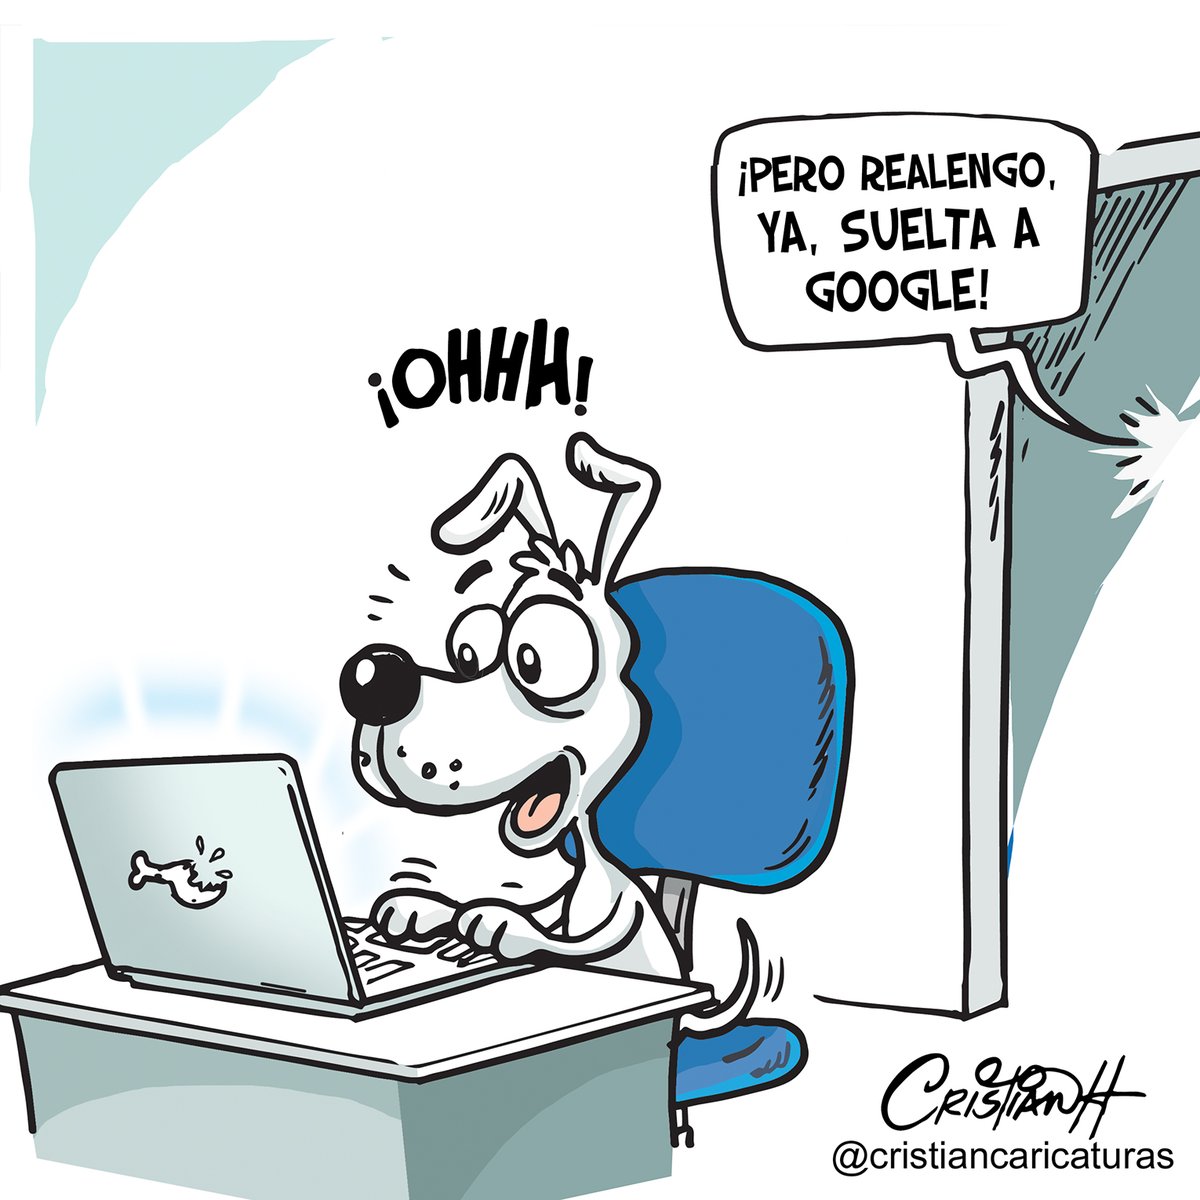 Cristian Hernández on Twitter: "Mi caricatura de hoy en @ElDia_do . . . .  #Google #Tbt #Leonel #abinader #criscaricaturas #realengocaricatura  https://t.co/6saPr4Gqg1" / Twitter